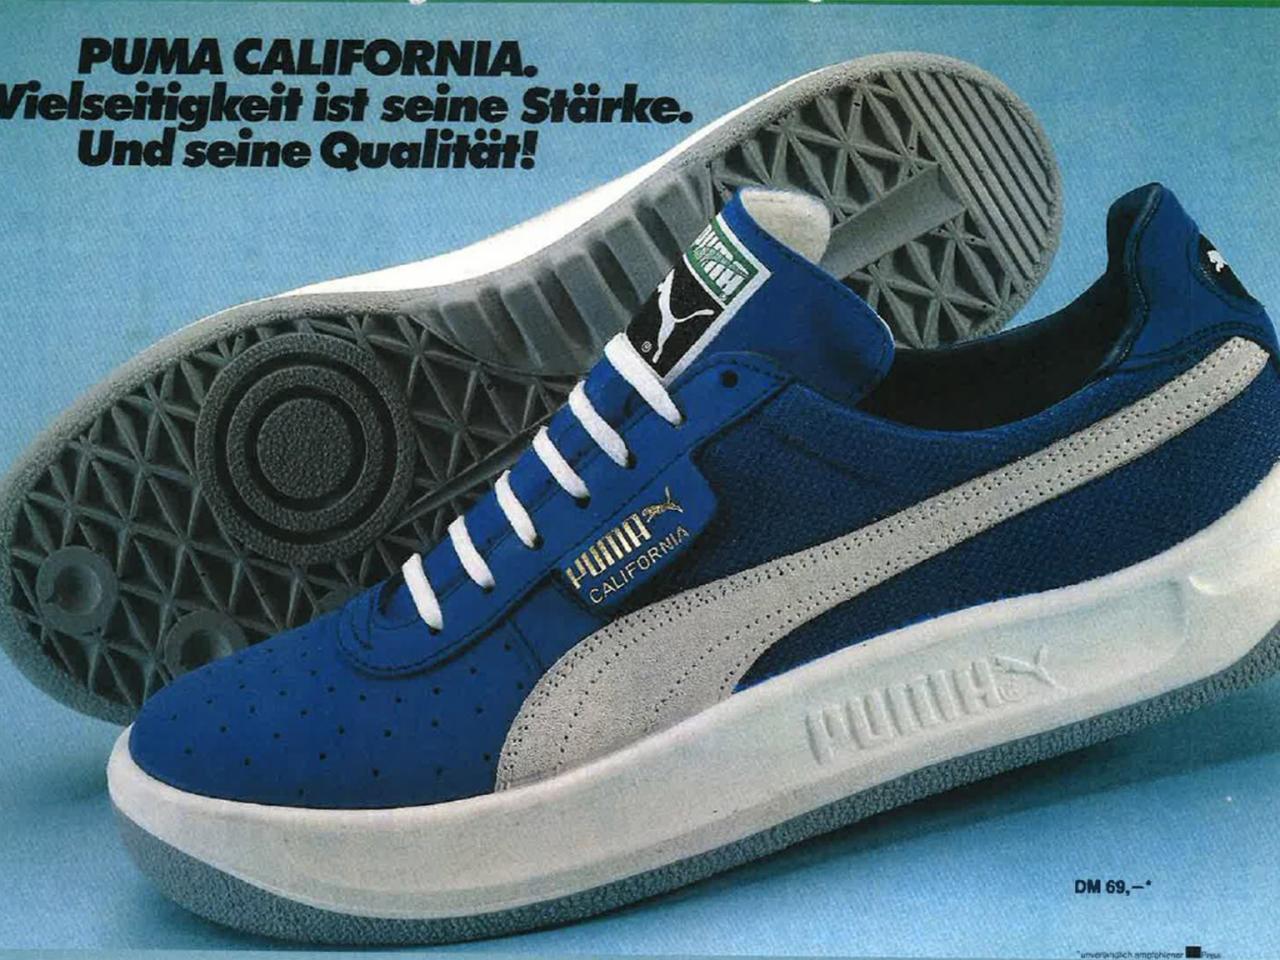 PUMA California from 1981